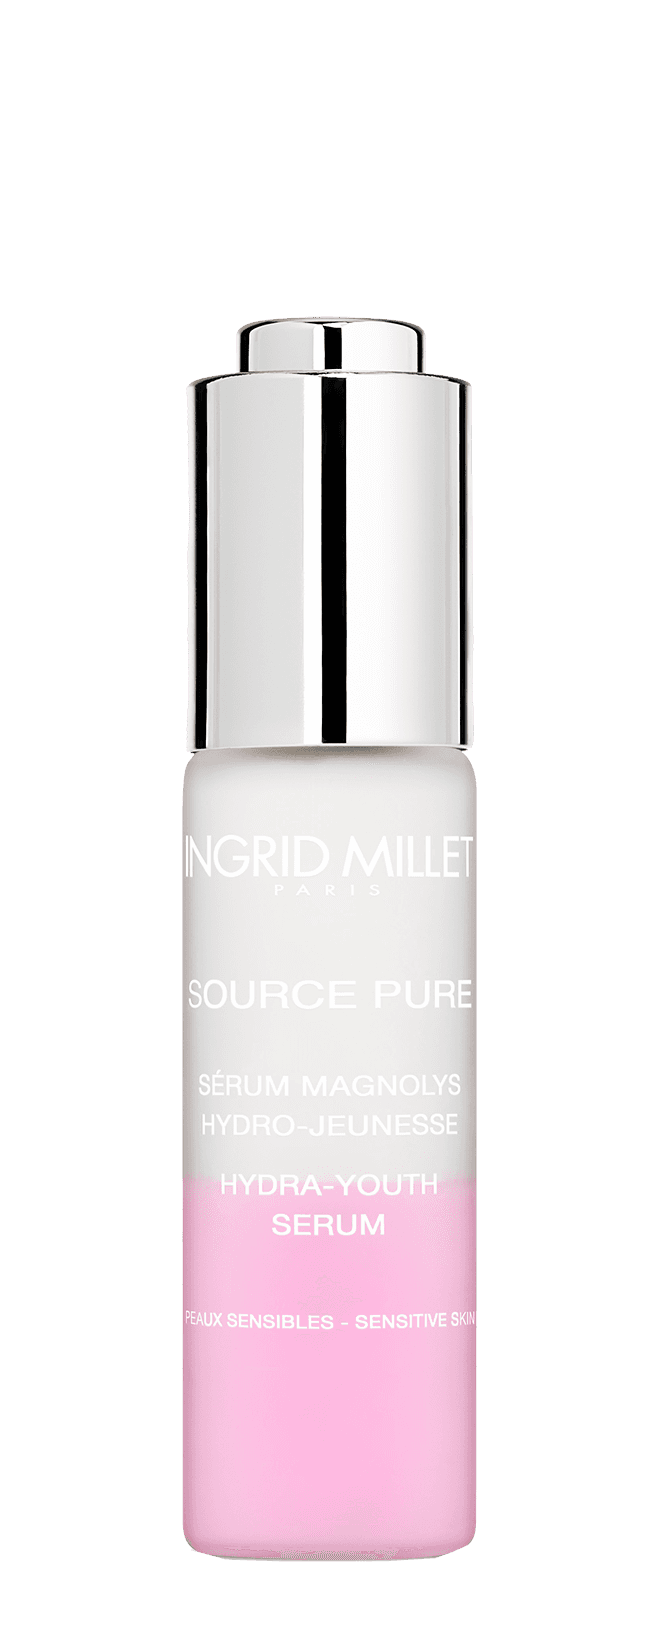 Ingrid Millet Source Pure Concentre Magnolys